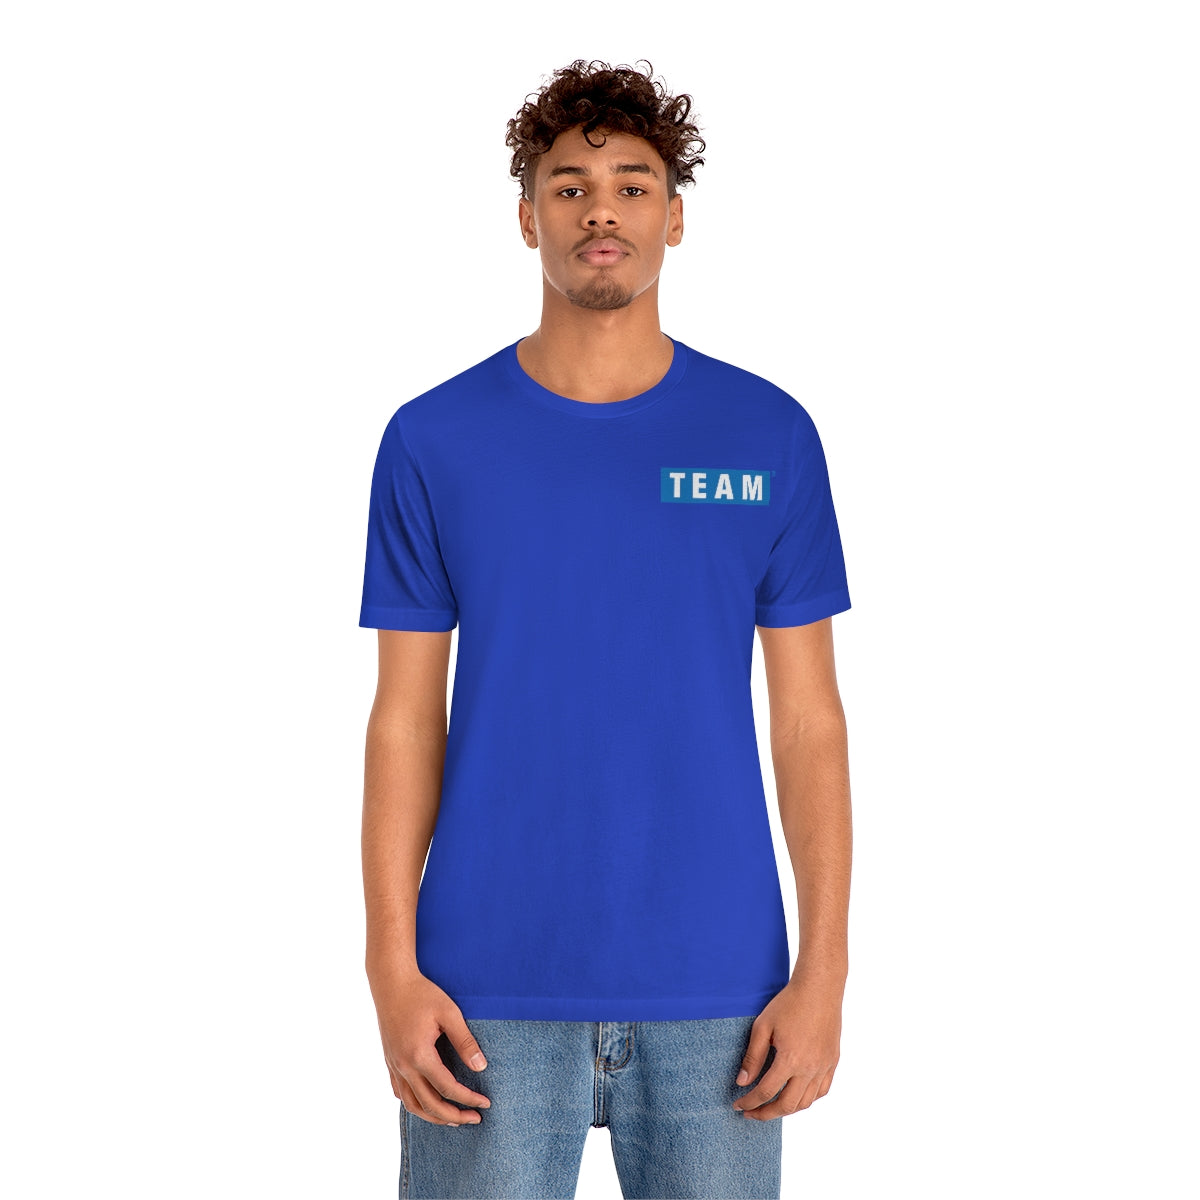 TEAM Short Sleeve T-shirt